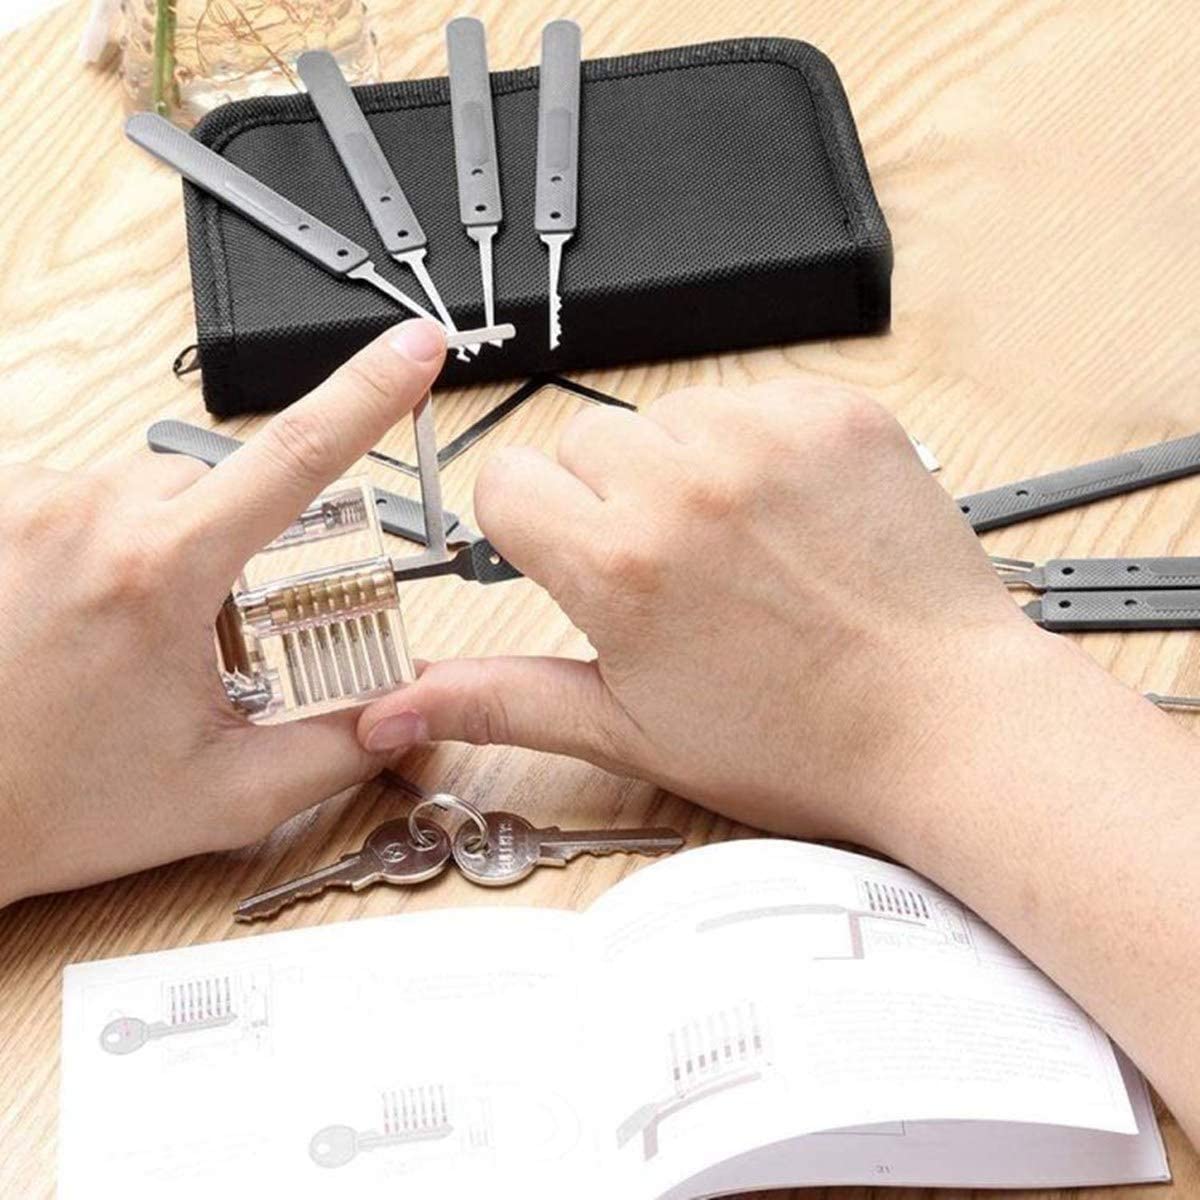 Professional Locksmith Factory Lock Pick Set Practice Lock Training Tool Kit with 3 transparent locks